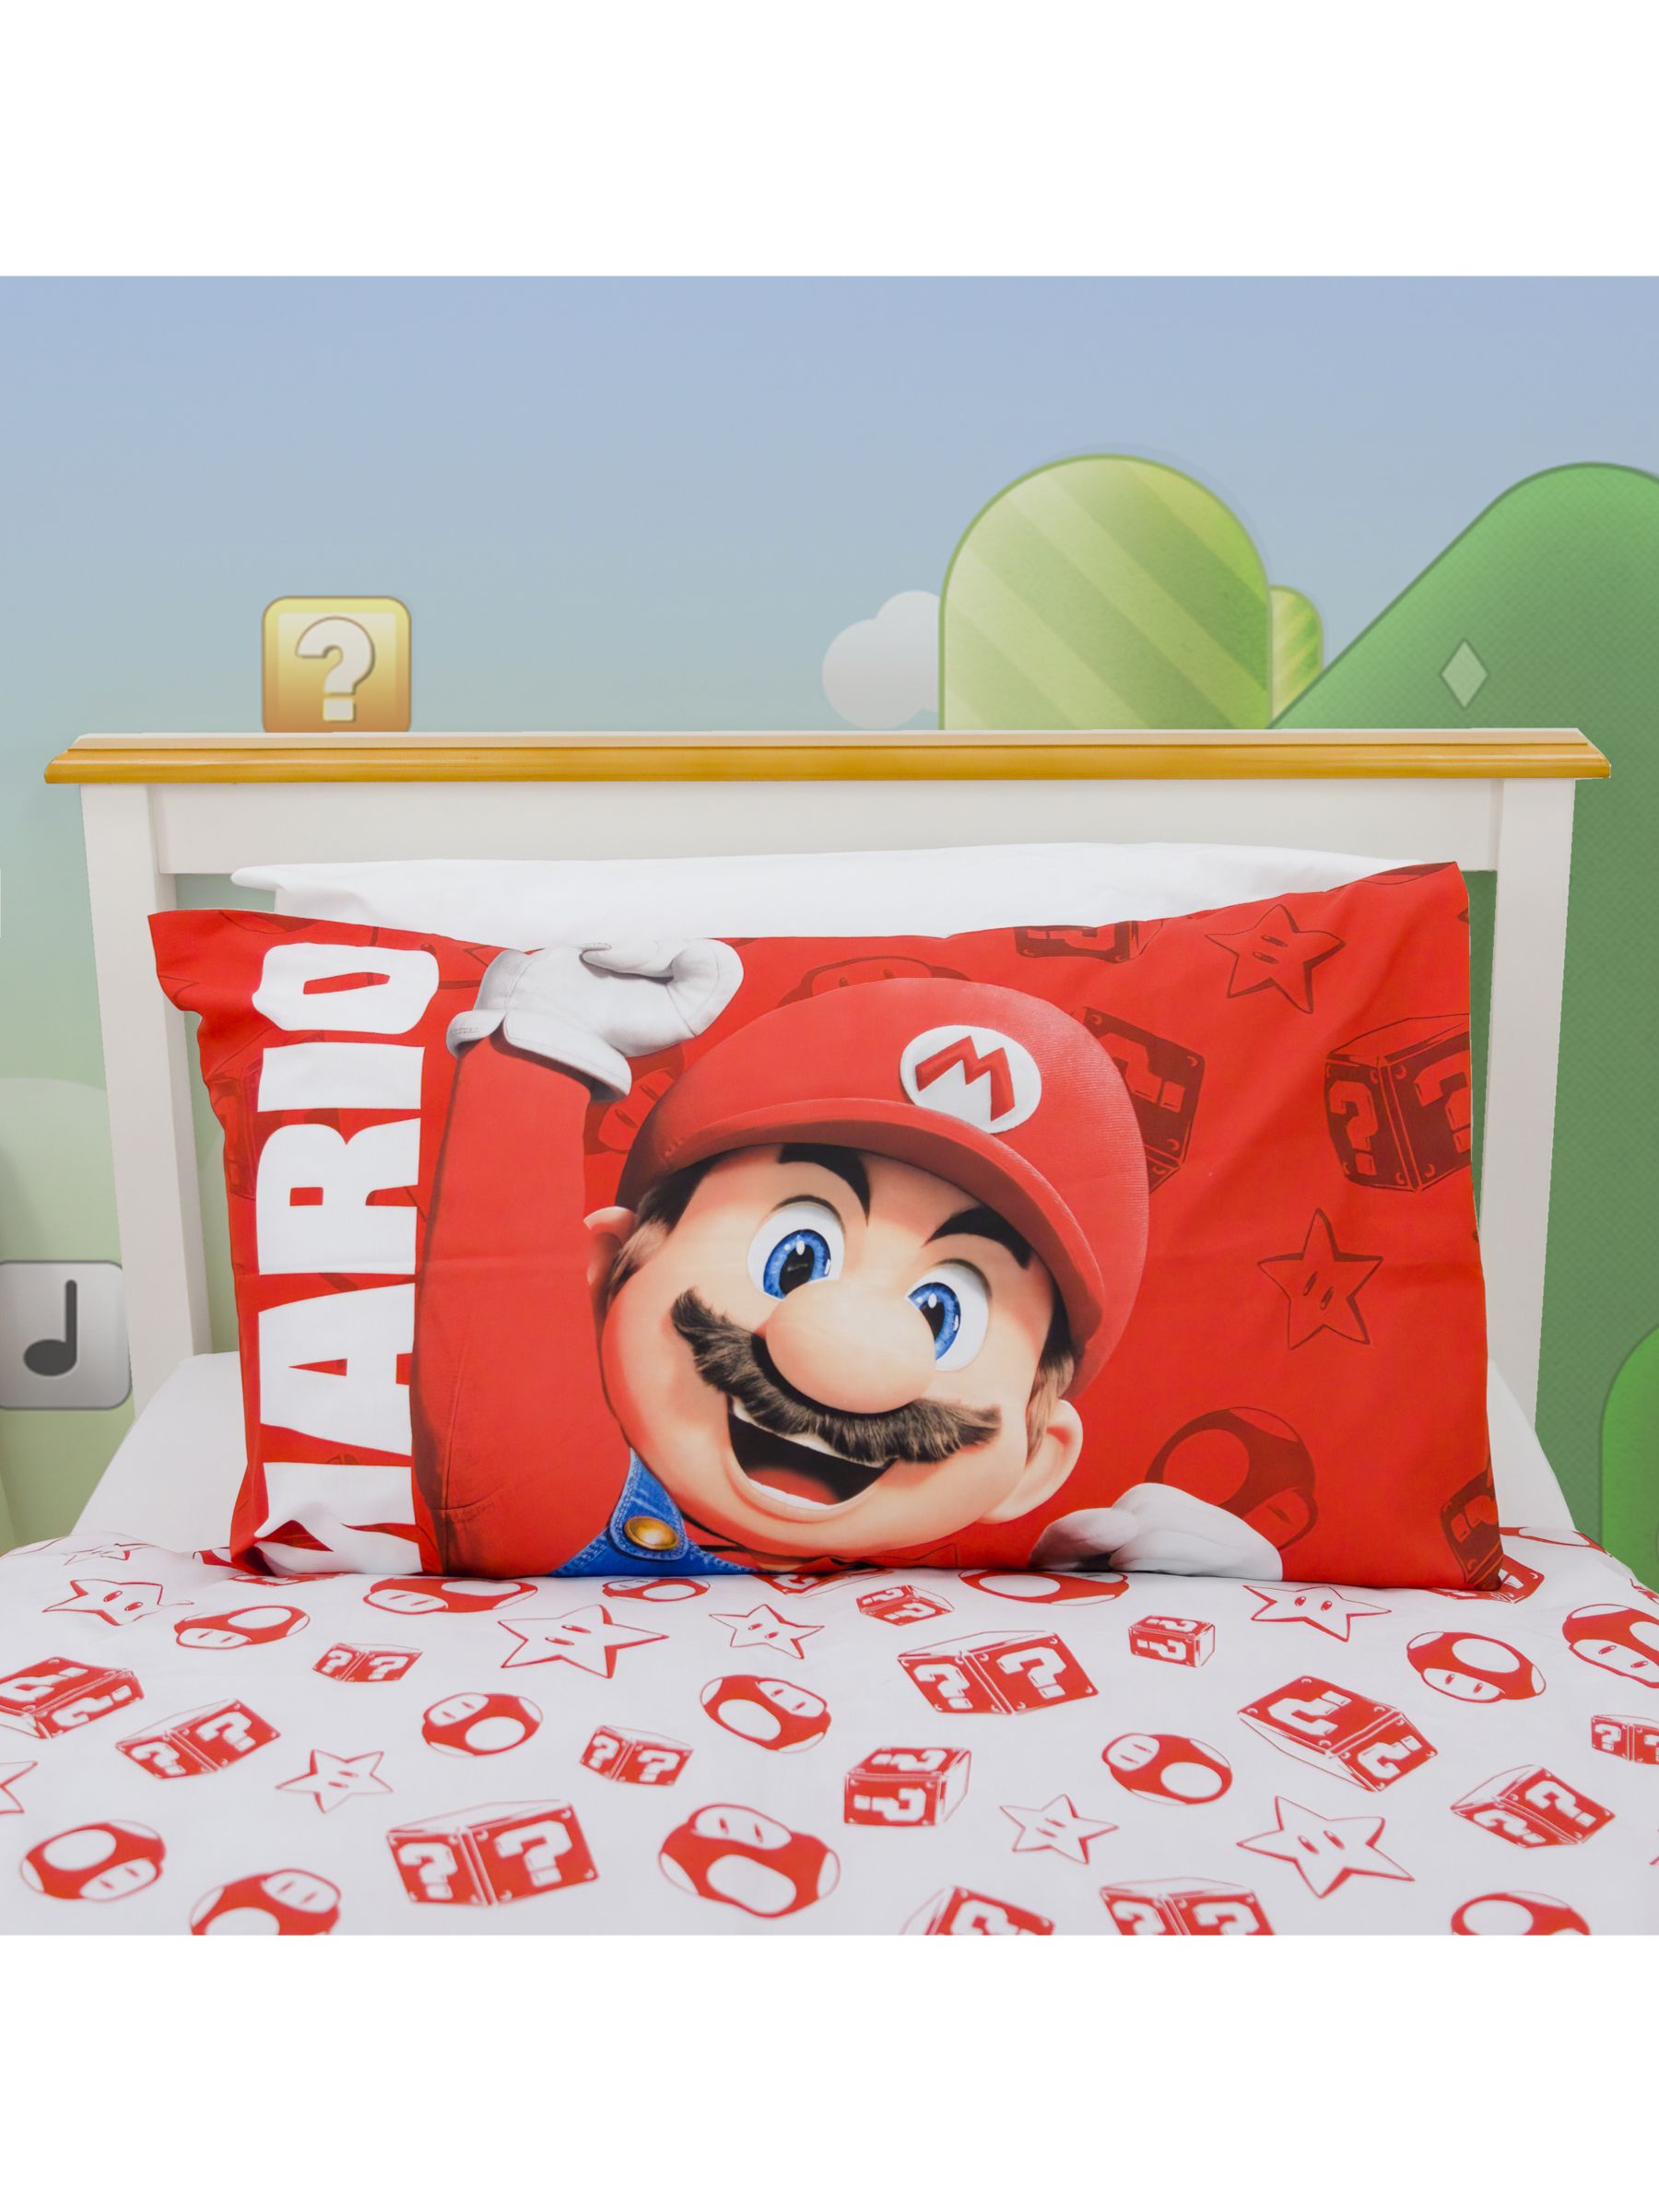 Super Mario Bros Characters Vinyl Kids Bedroom Living Room Wall